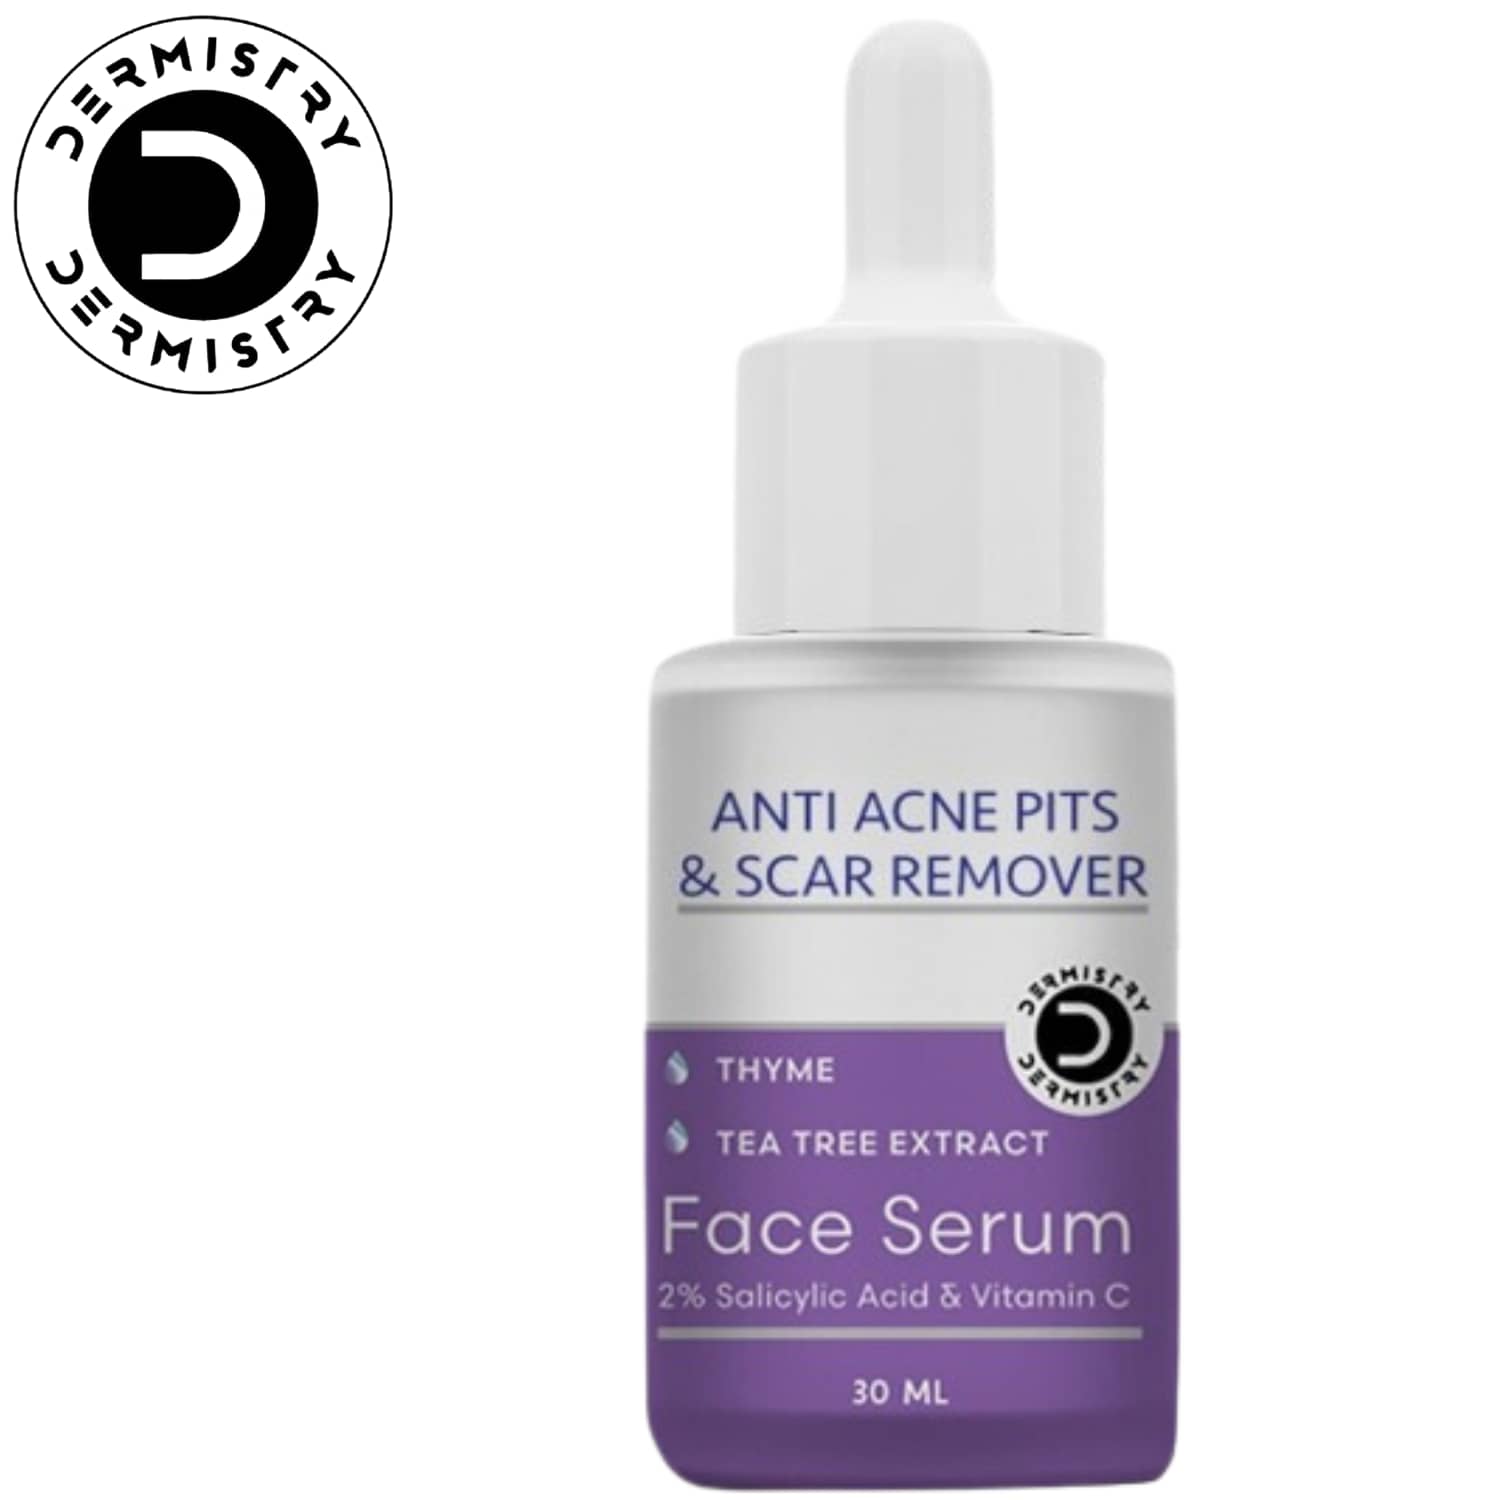 Dermistry Anti Acne 2% Salicylic Acid Niacinamide & Vitamin C Pits Scars Dark Spots Face Serum-30ml